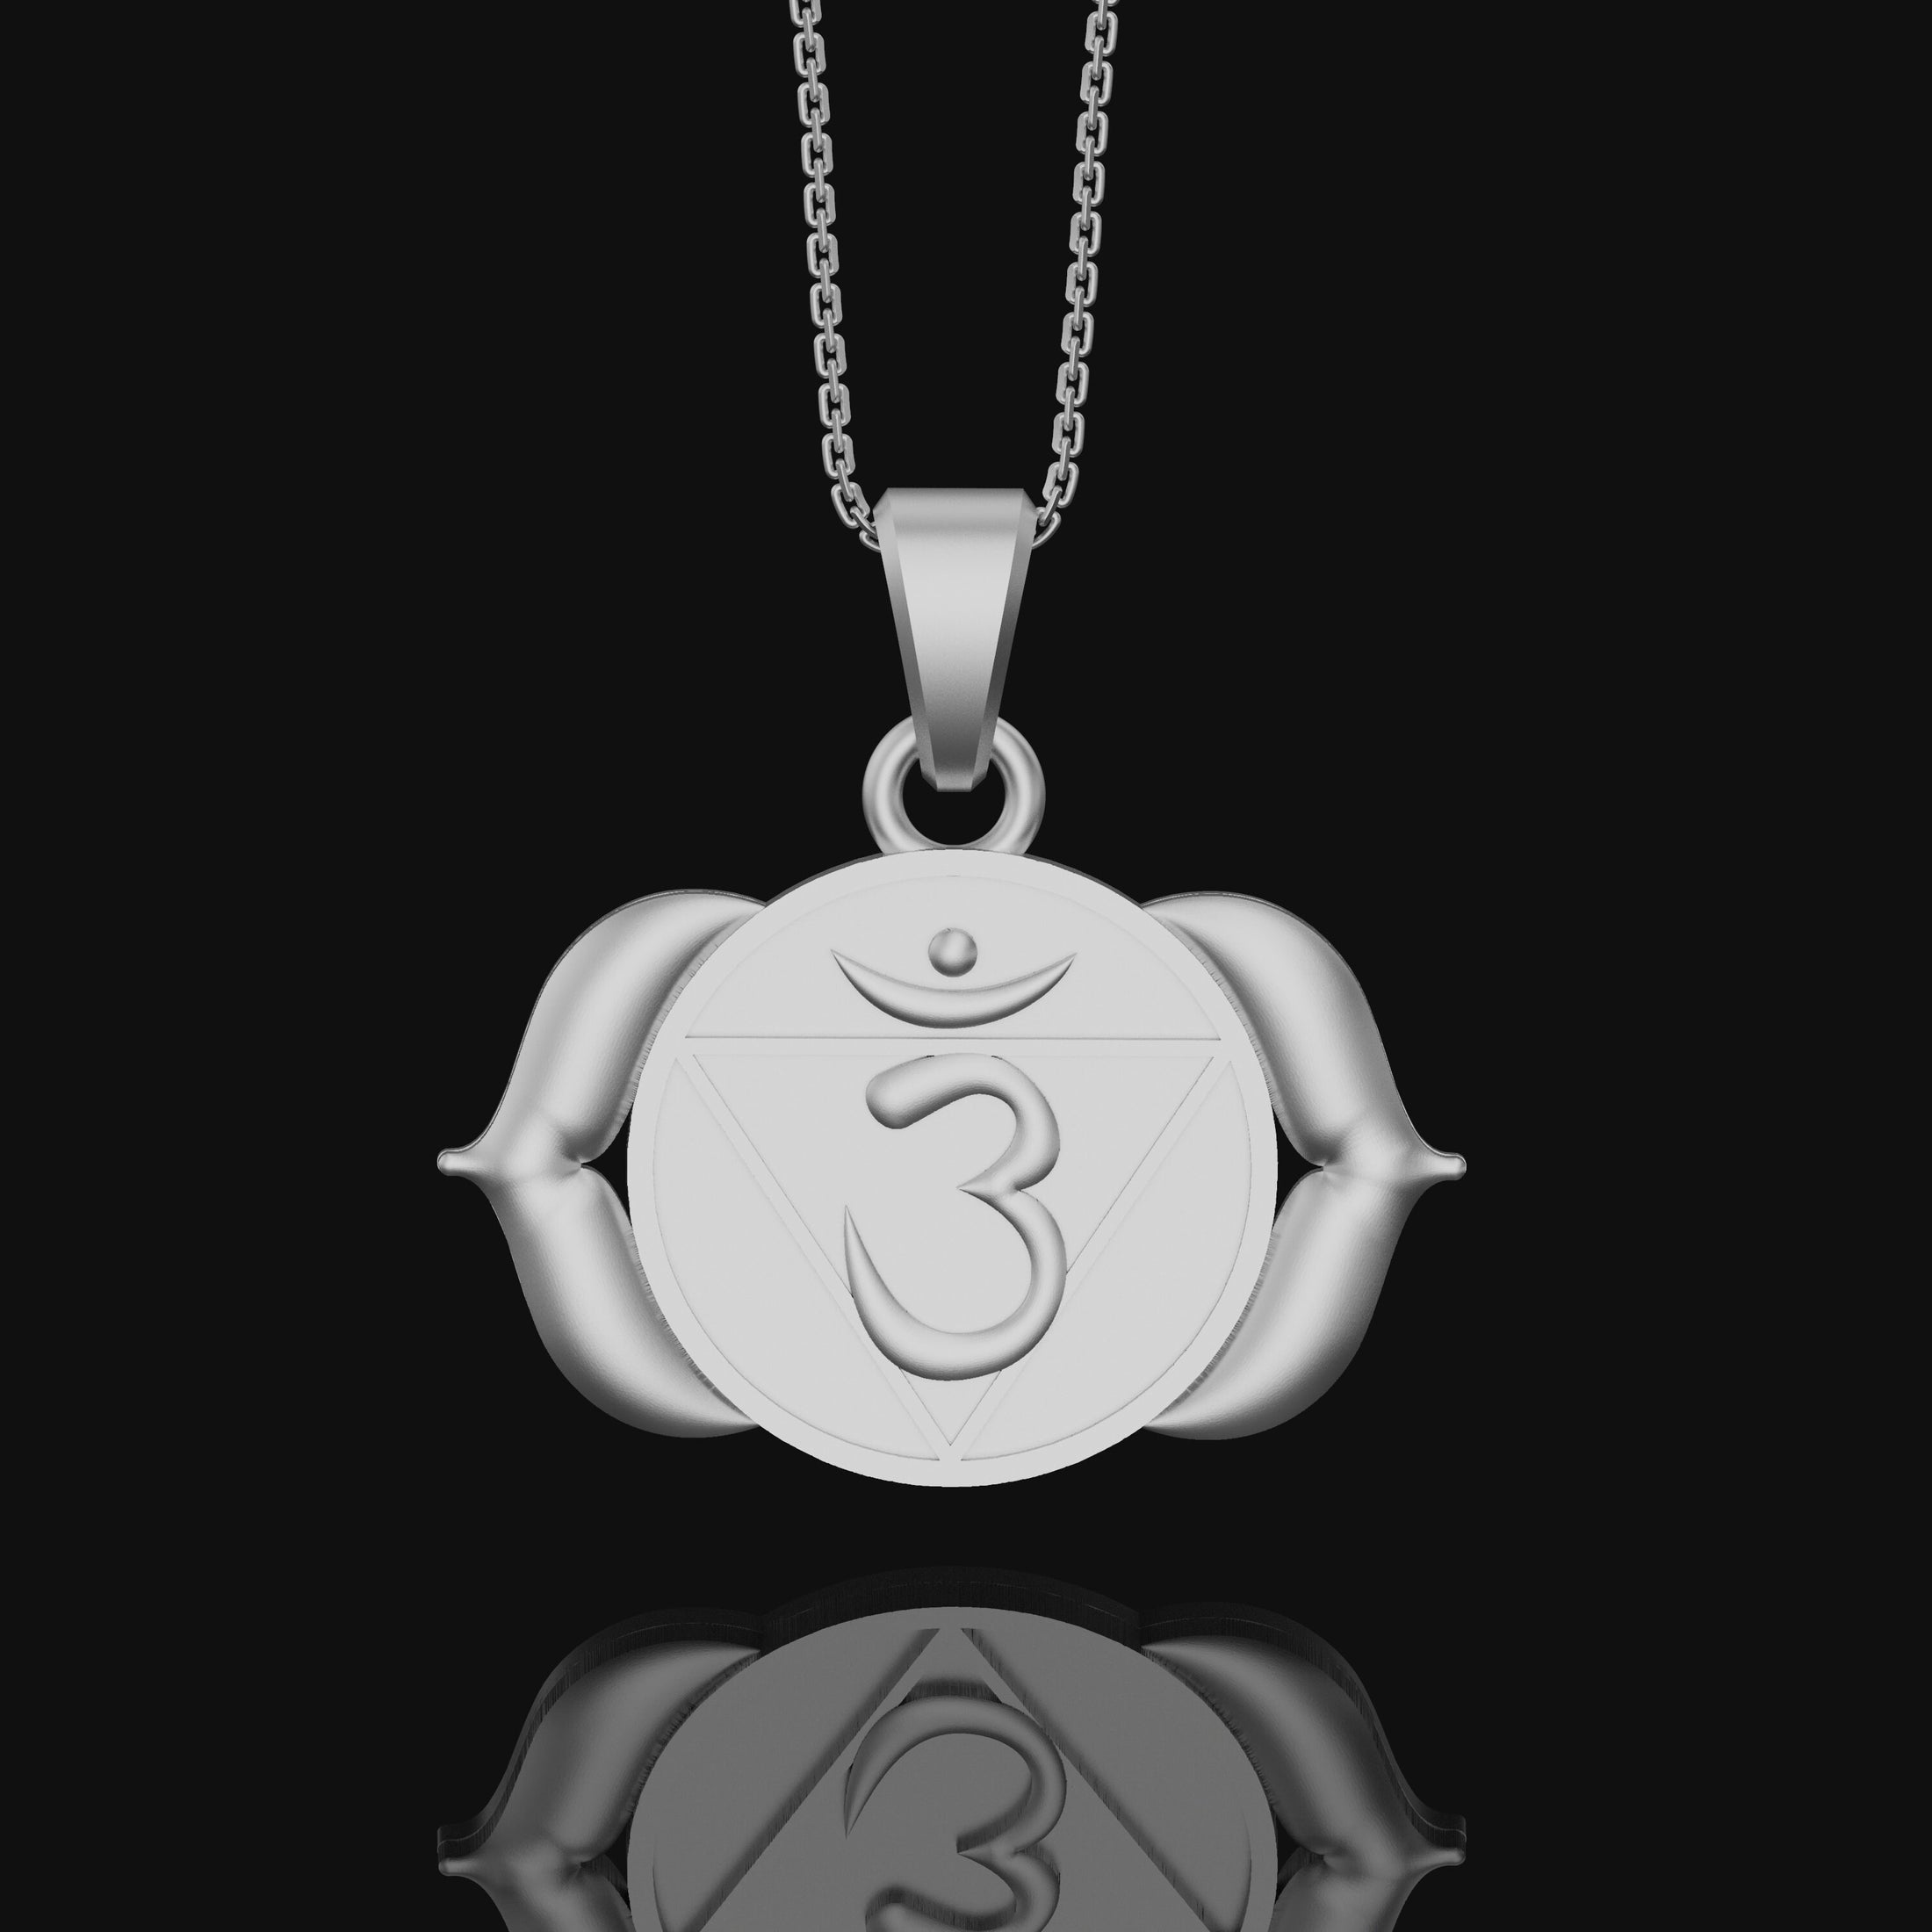 Third Eye Chakra Necklace, Chakras, Meditation, Reiki, Spiritual Gift, Metaphysical, Gift For Her, Handmade Jewelry Polished Finish